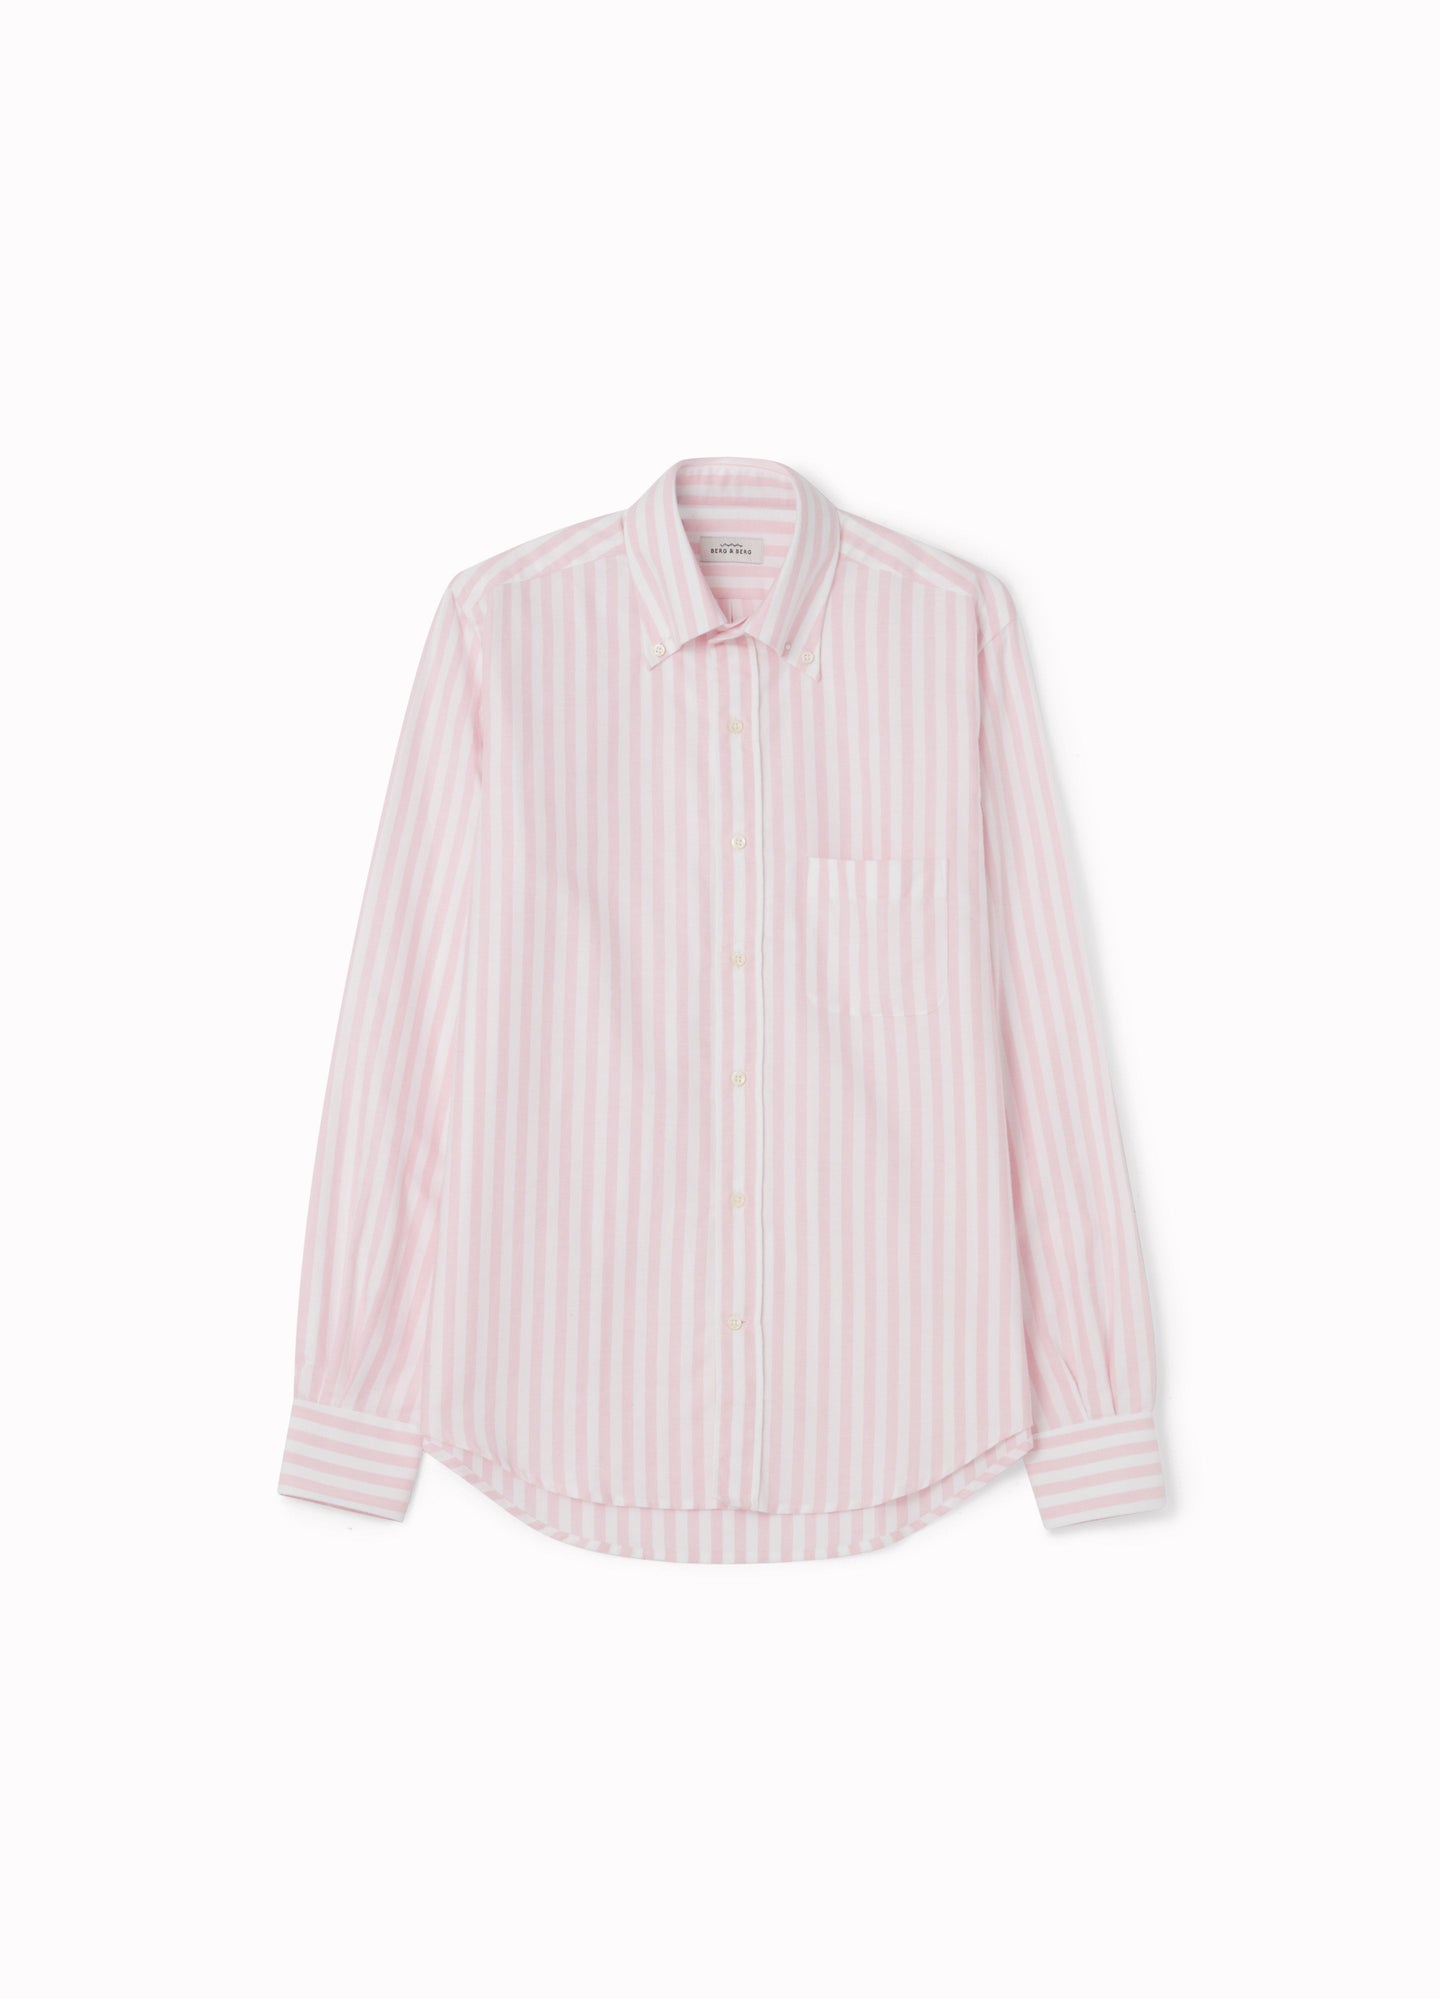 Ferdinand Button Down Shirt - Pink/White Berg & Berg